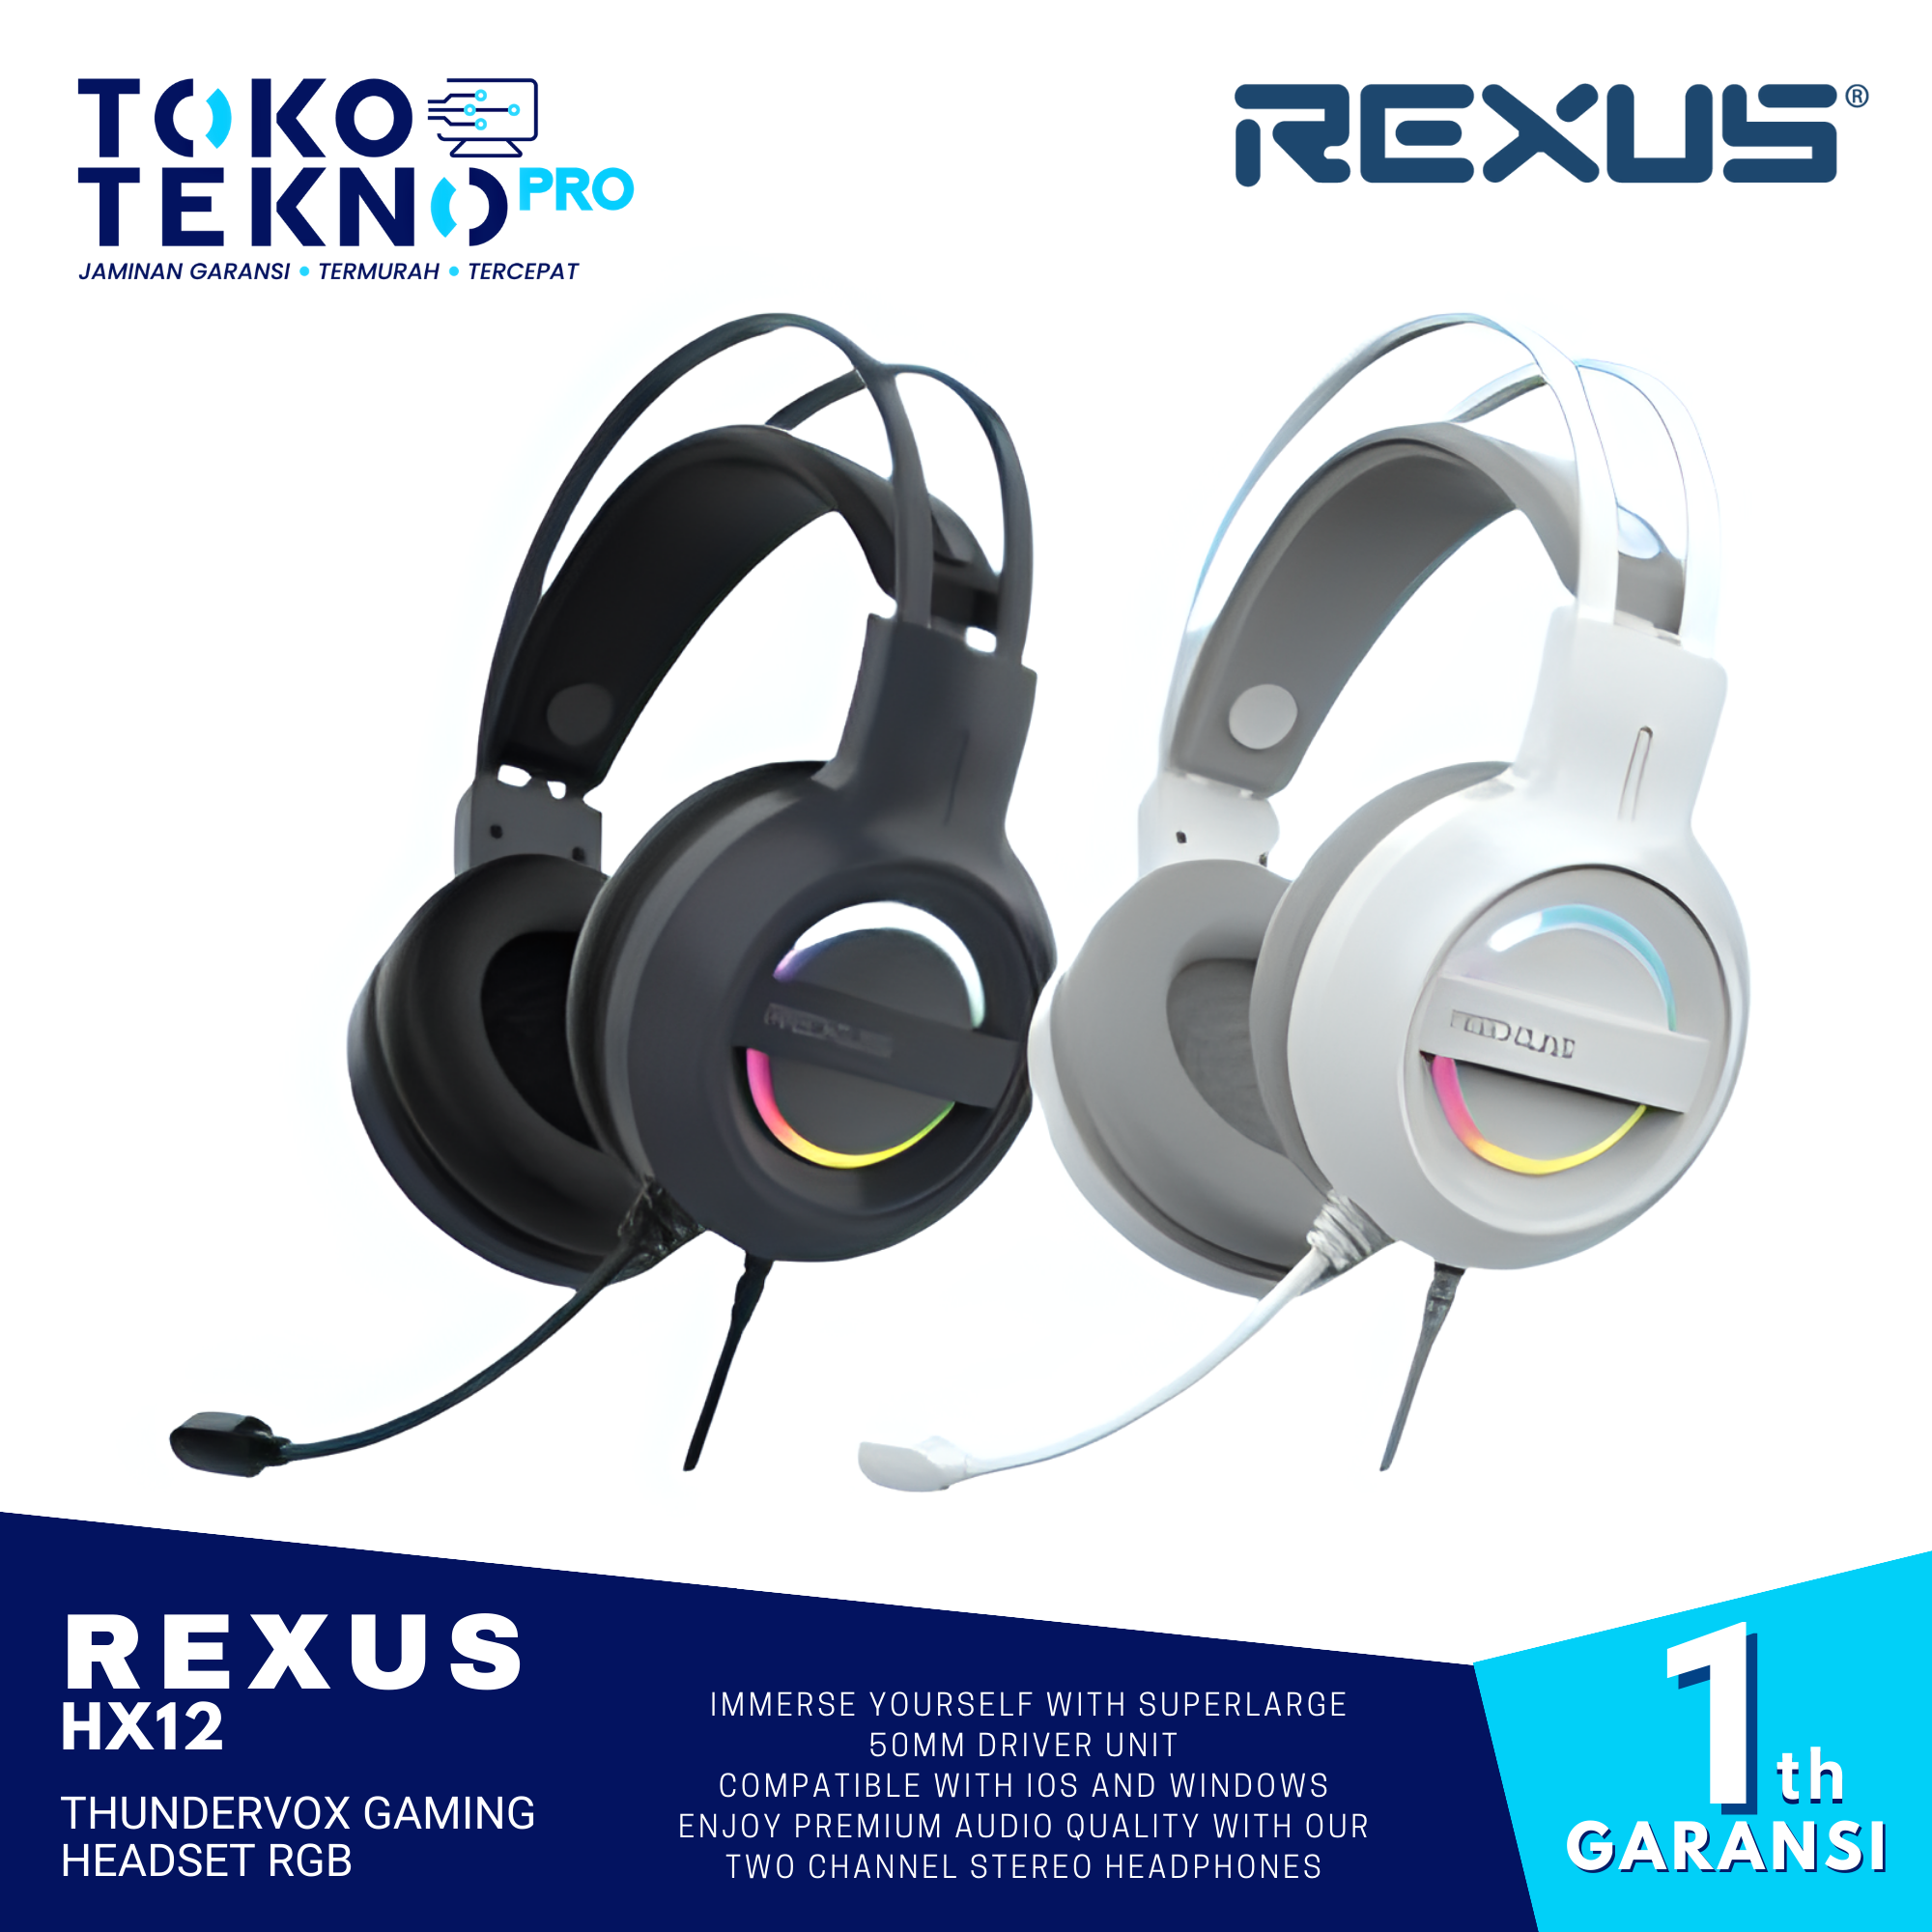 Rexus HX12 Thundervox Gaming Headset RGB With 50mm Driver